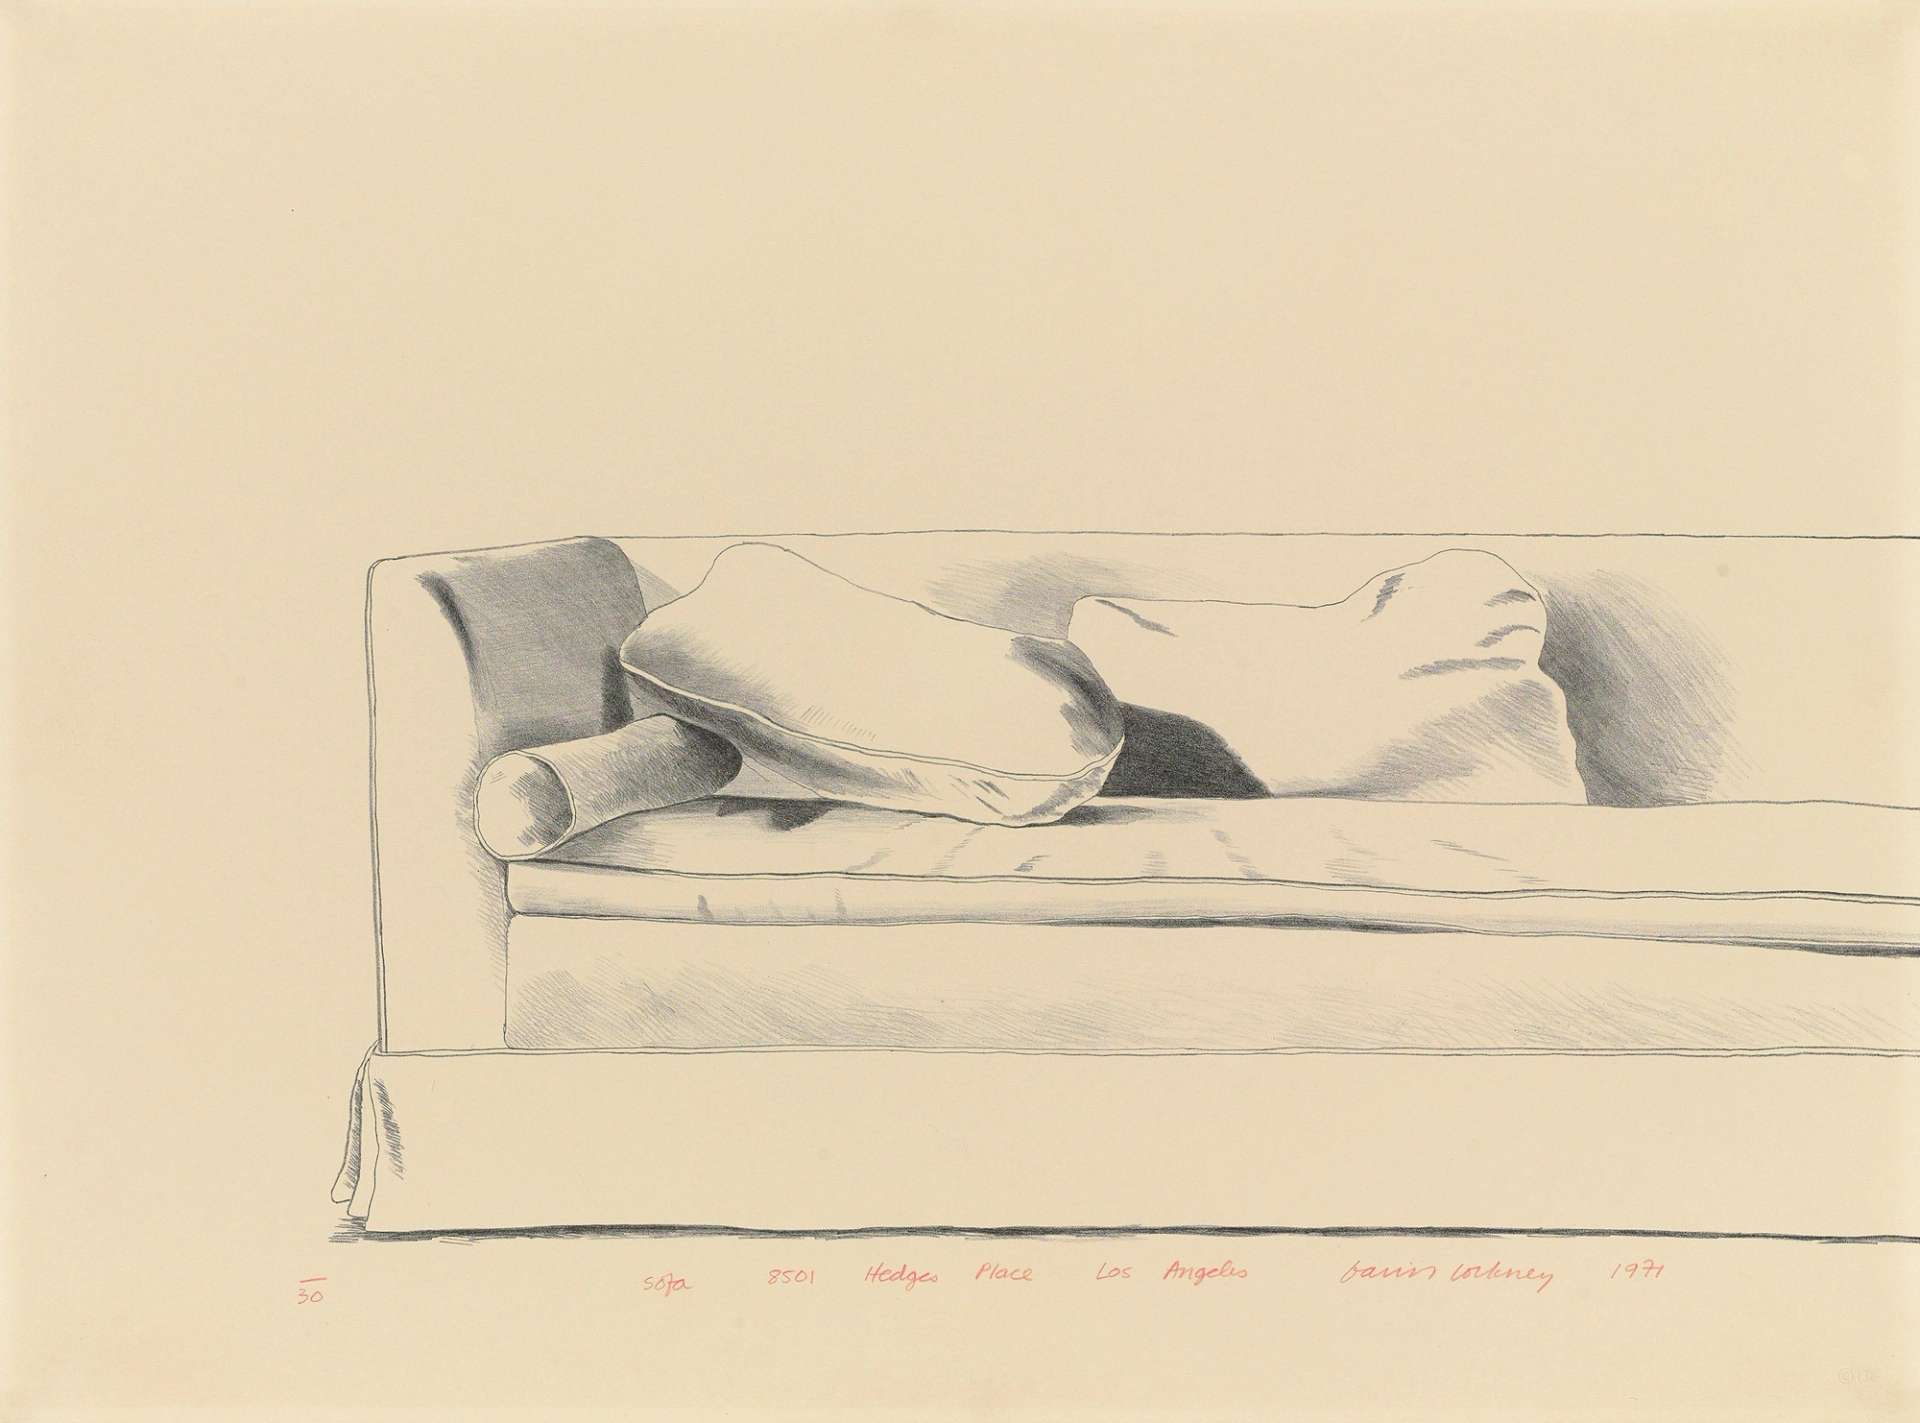 Sofa 8501 Hedges Place - Signed Print by David Hockney 1971 - MyArtBroker